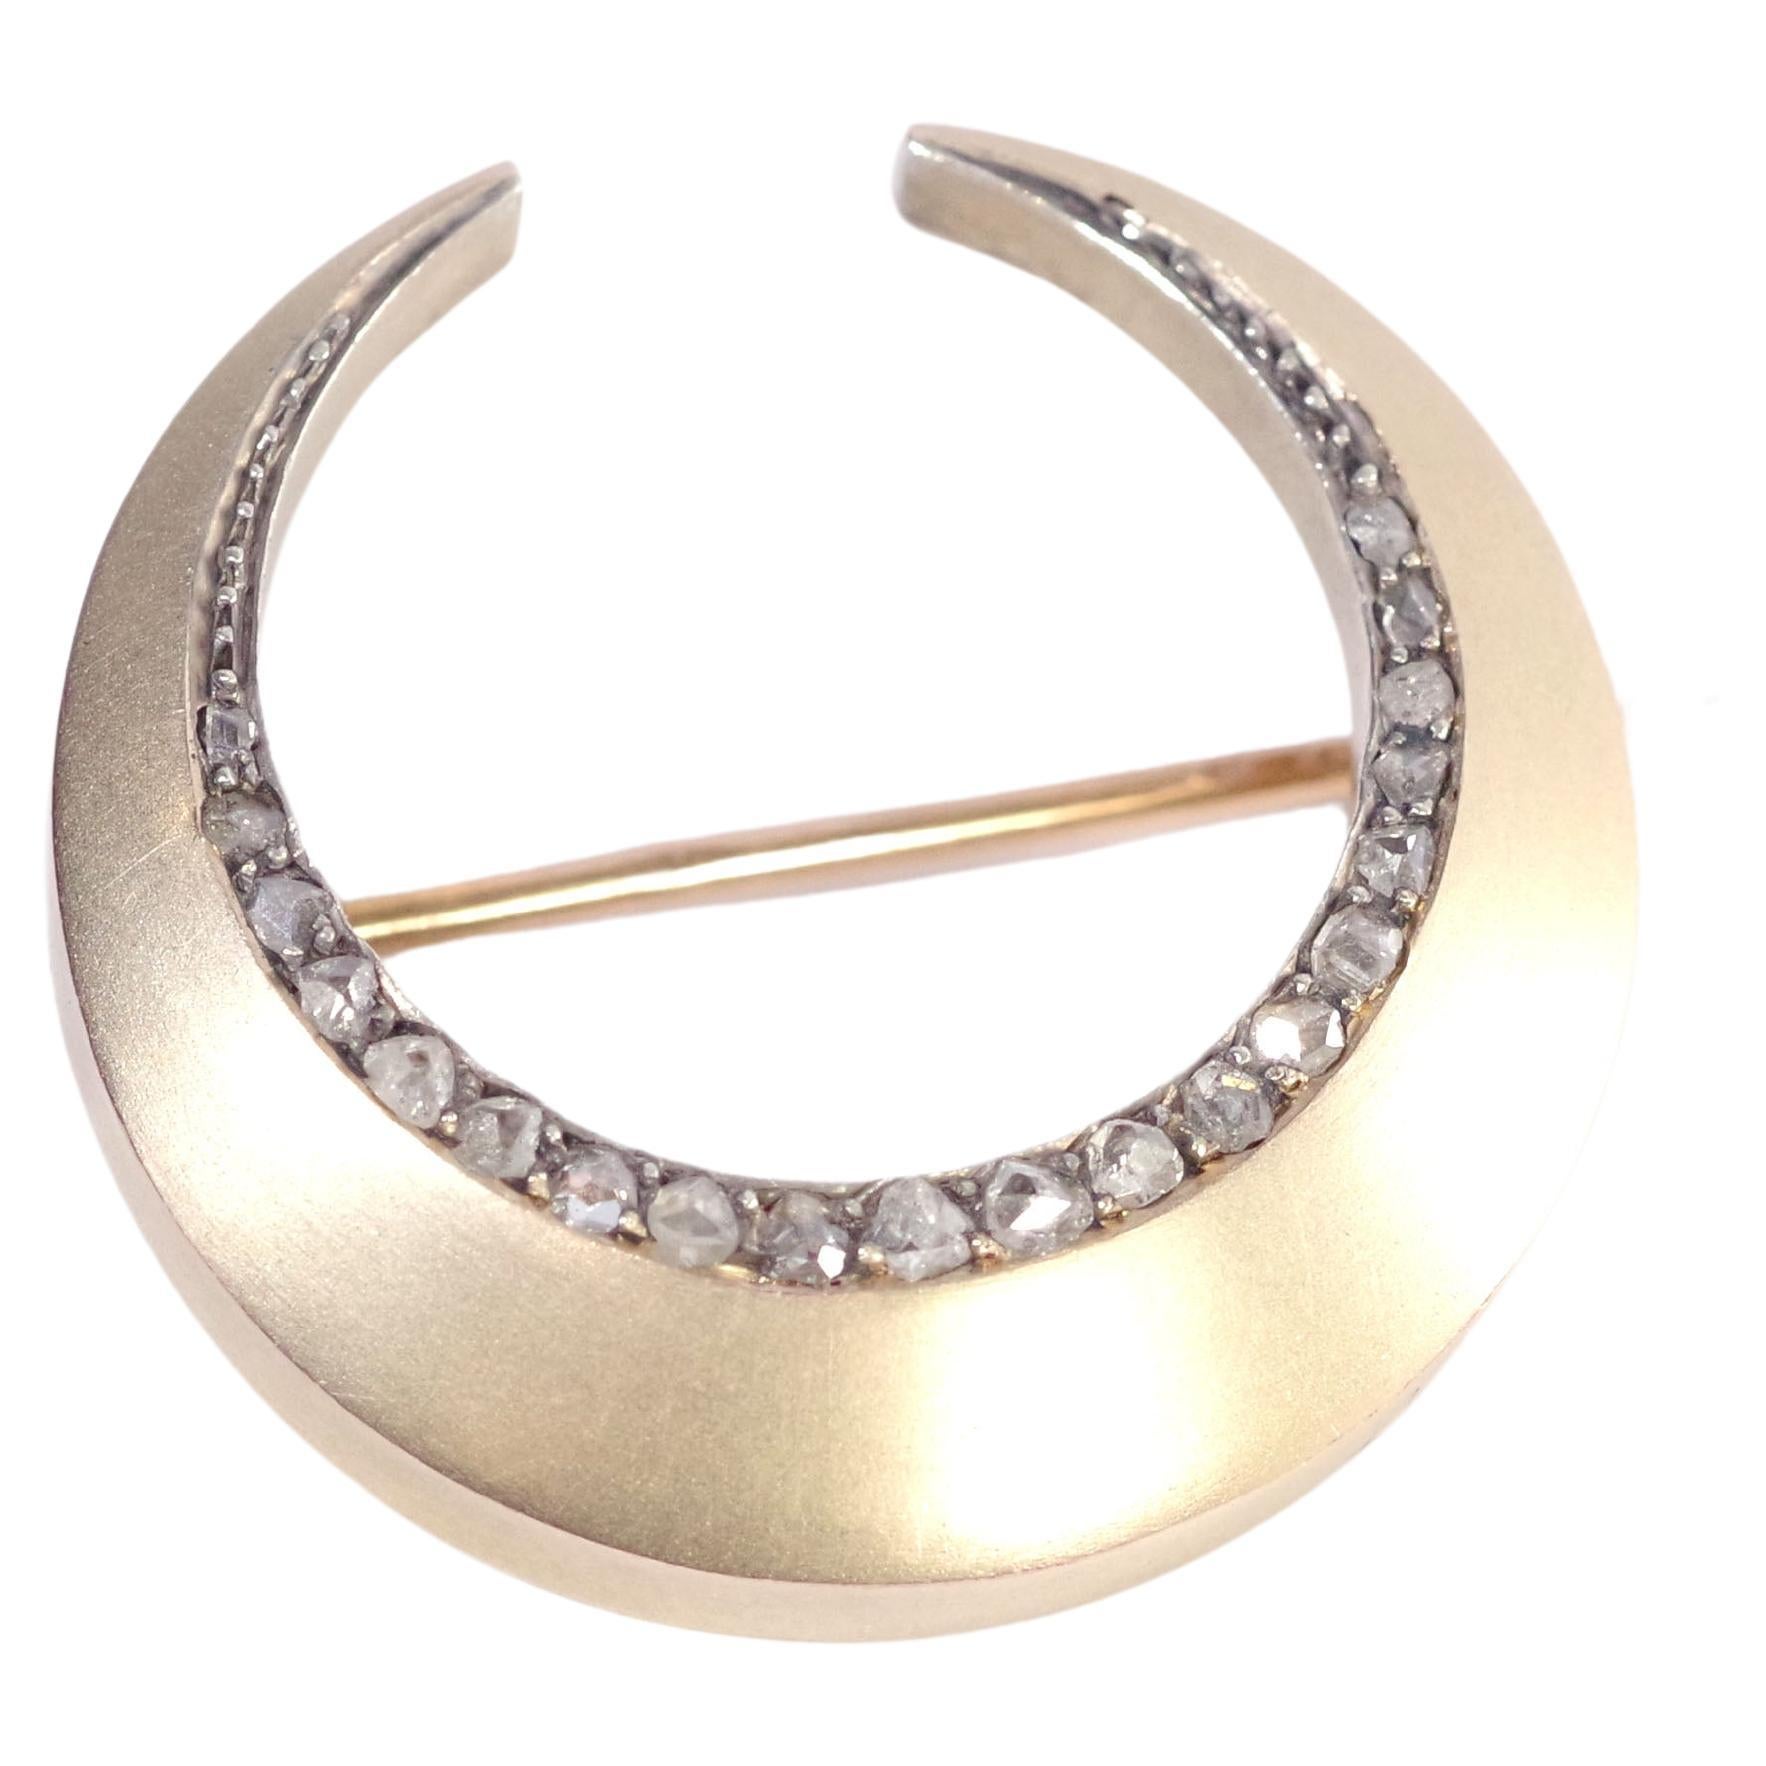 Edwardian crescent moon brooch in 18k gold with diamonds, art deco brooch